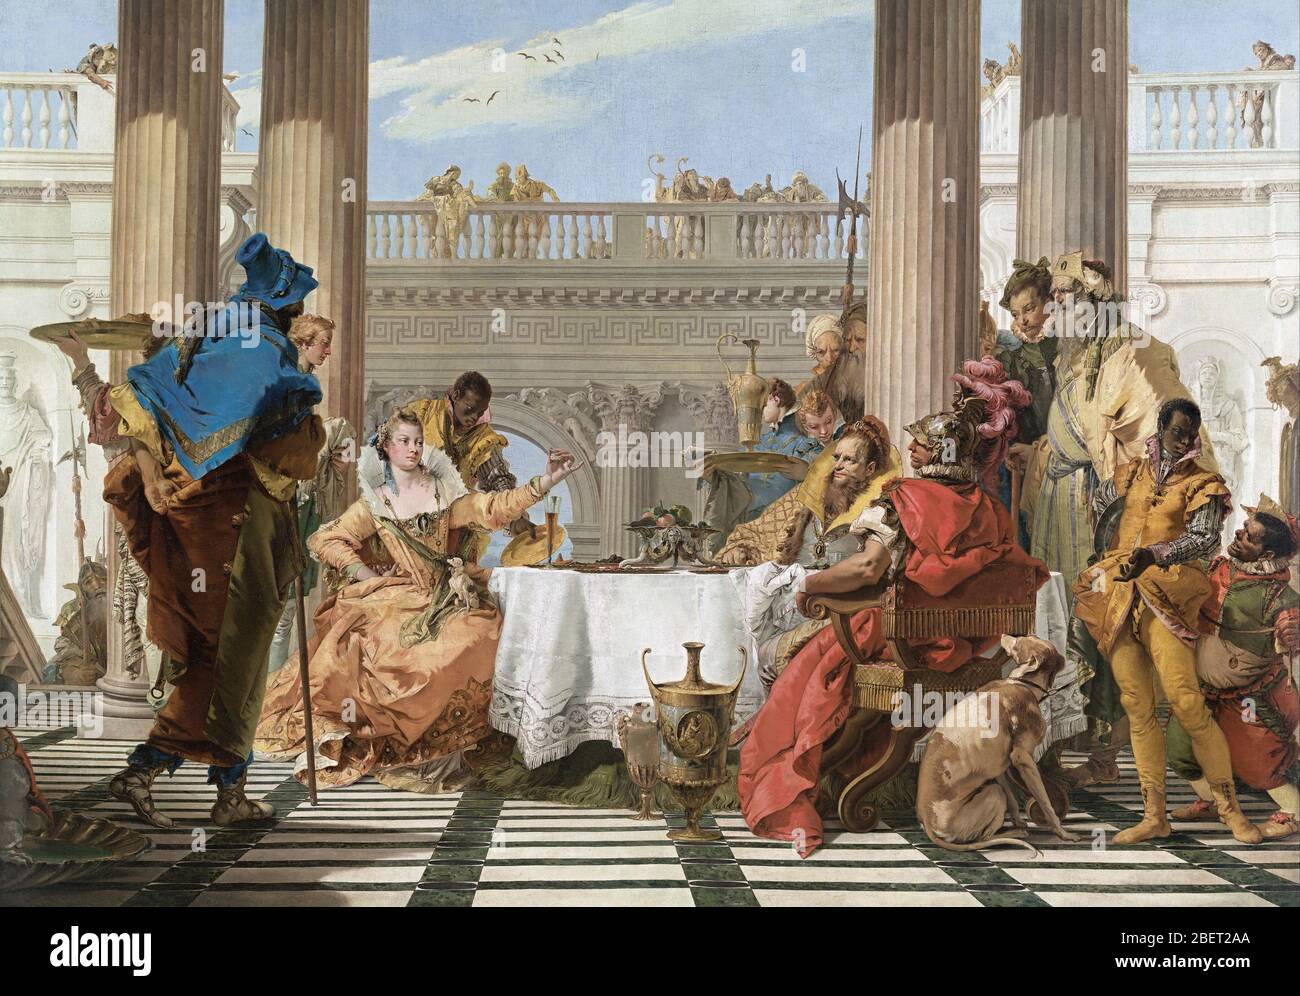 El banquete de Cleoatro pintura al óleo representa a la reina egipcia Cleopatra teniendo un espléndido banquete. Foto de stock